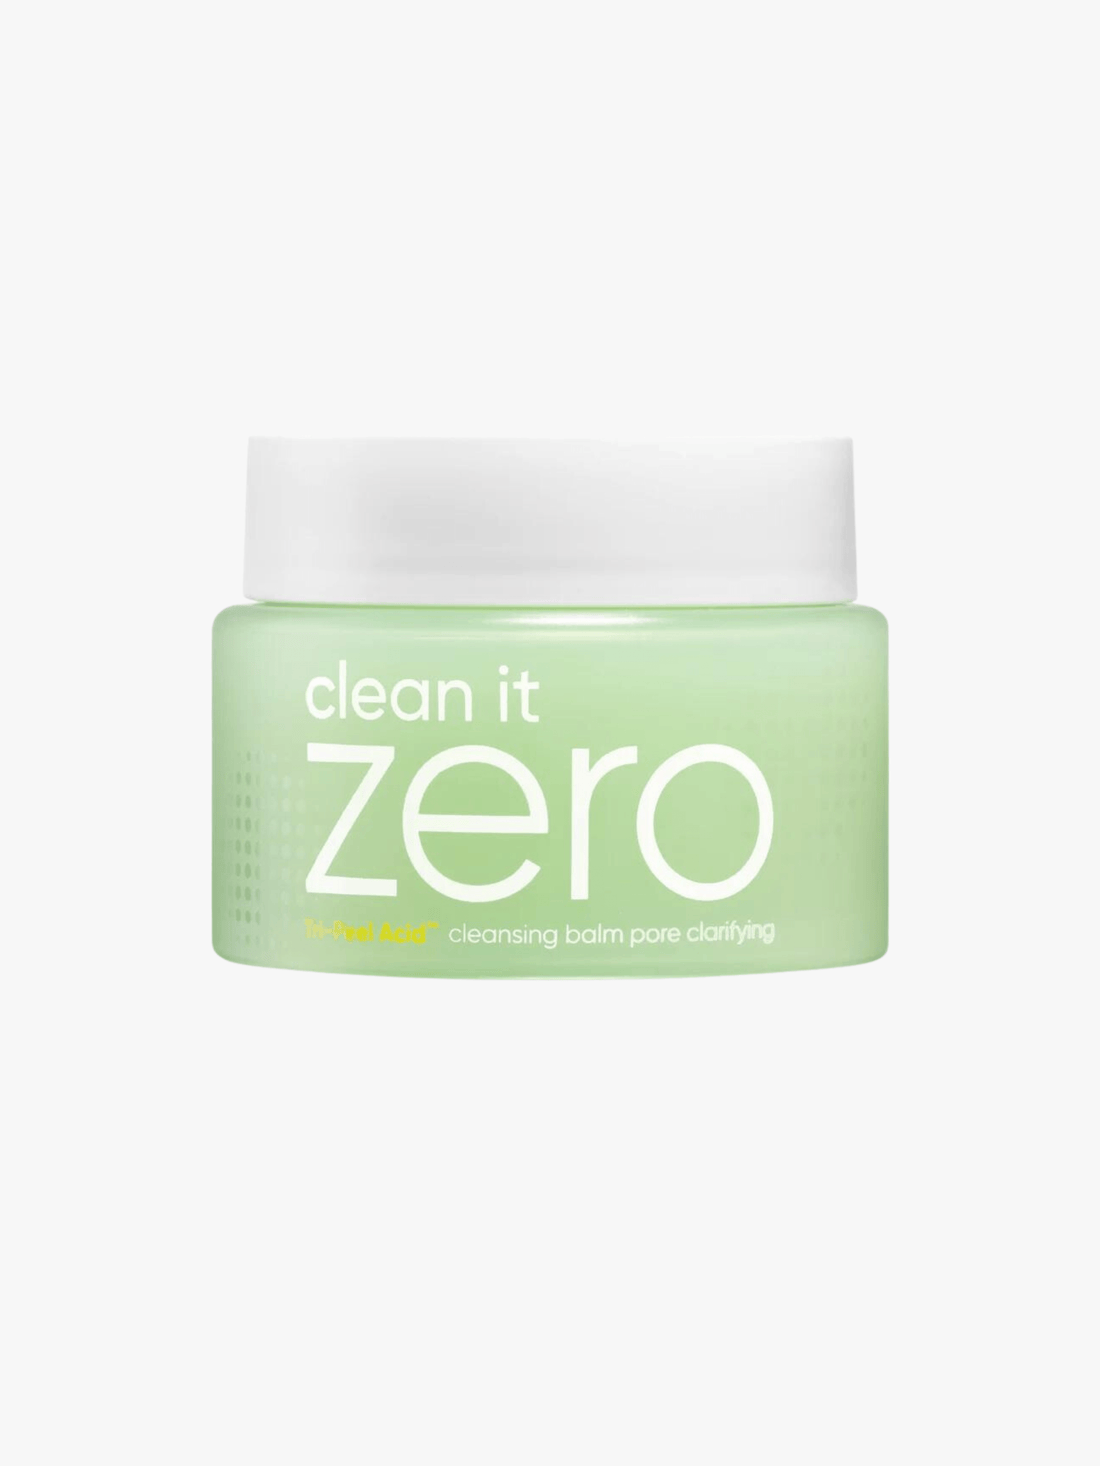 Banila Co - Baume nettoyant - Clean it zero cleansing balm Pore Clarifying